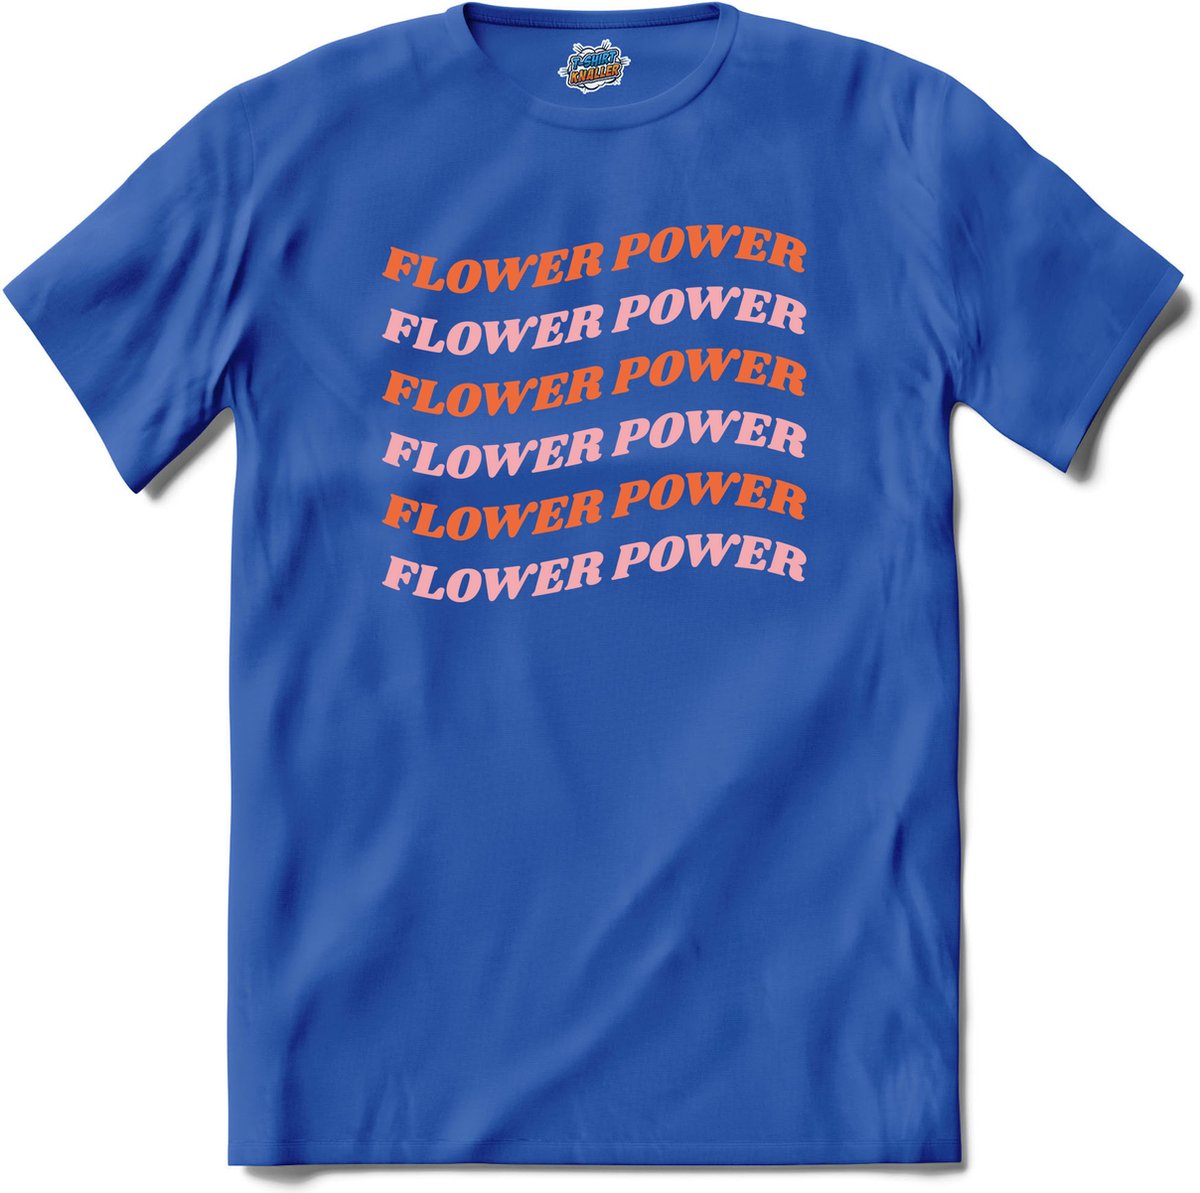 Flower power - T-Shirt - Jongens - Royal Blue - Maat 10 jaar